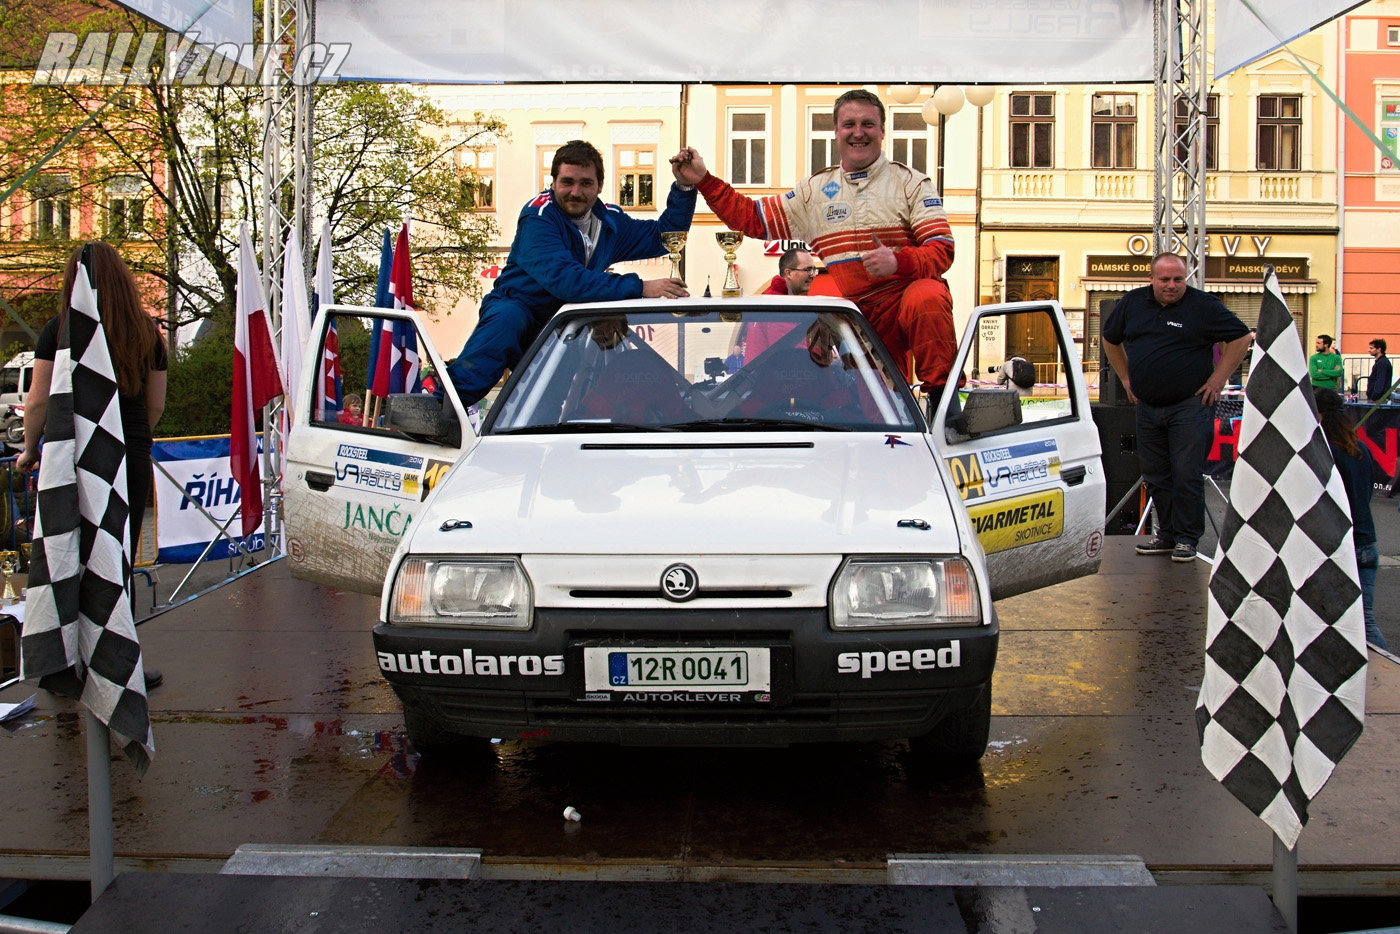 Valašská Rally (CZE)